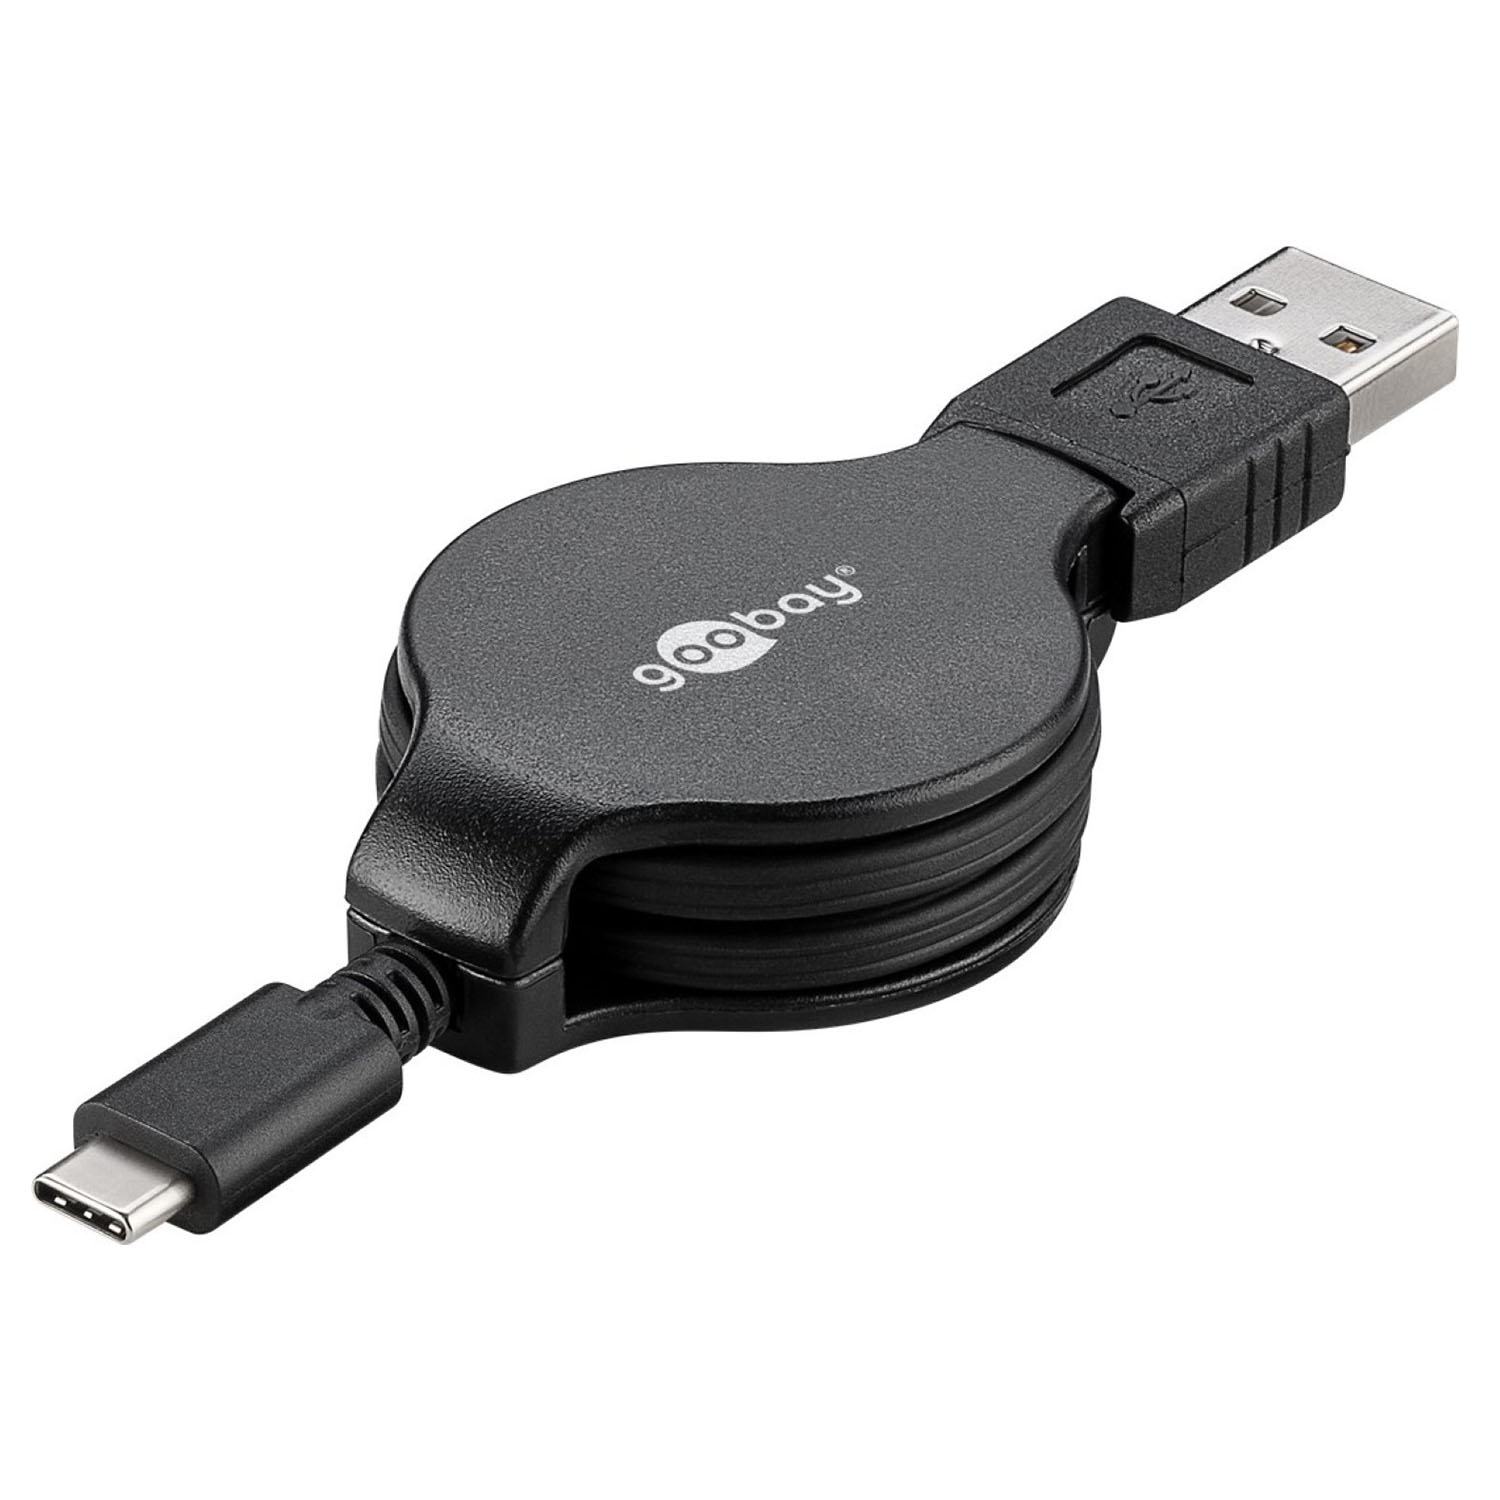 GOOBAY Lade-/Datenkabel ausziehbar USB Kabel Ladekabel Datenkabel, C schwarz